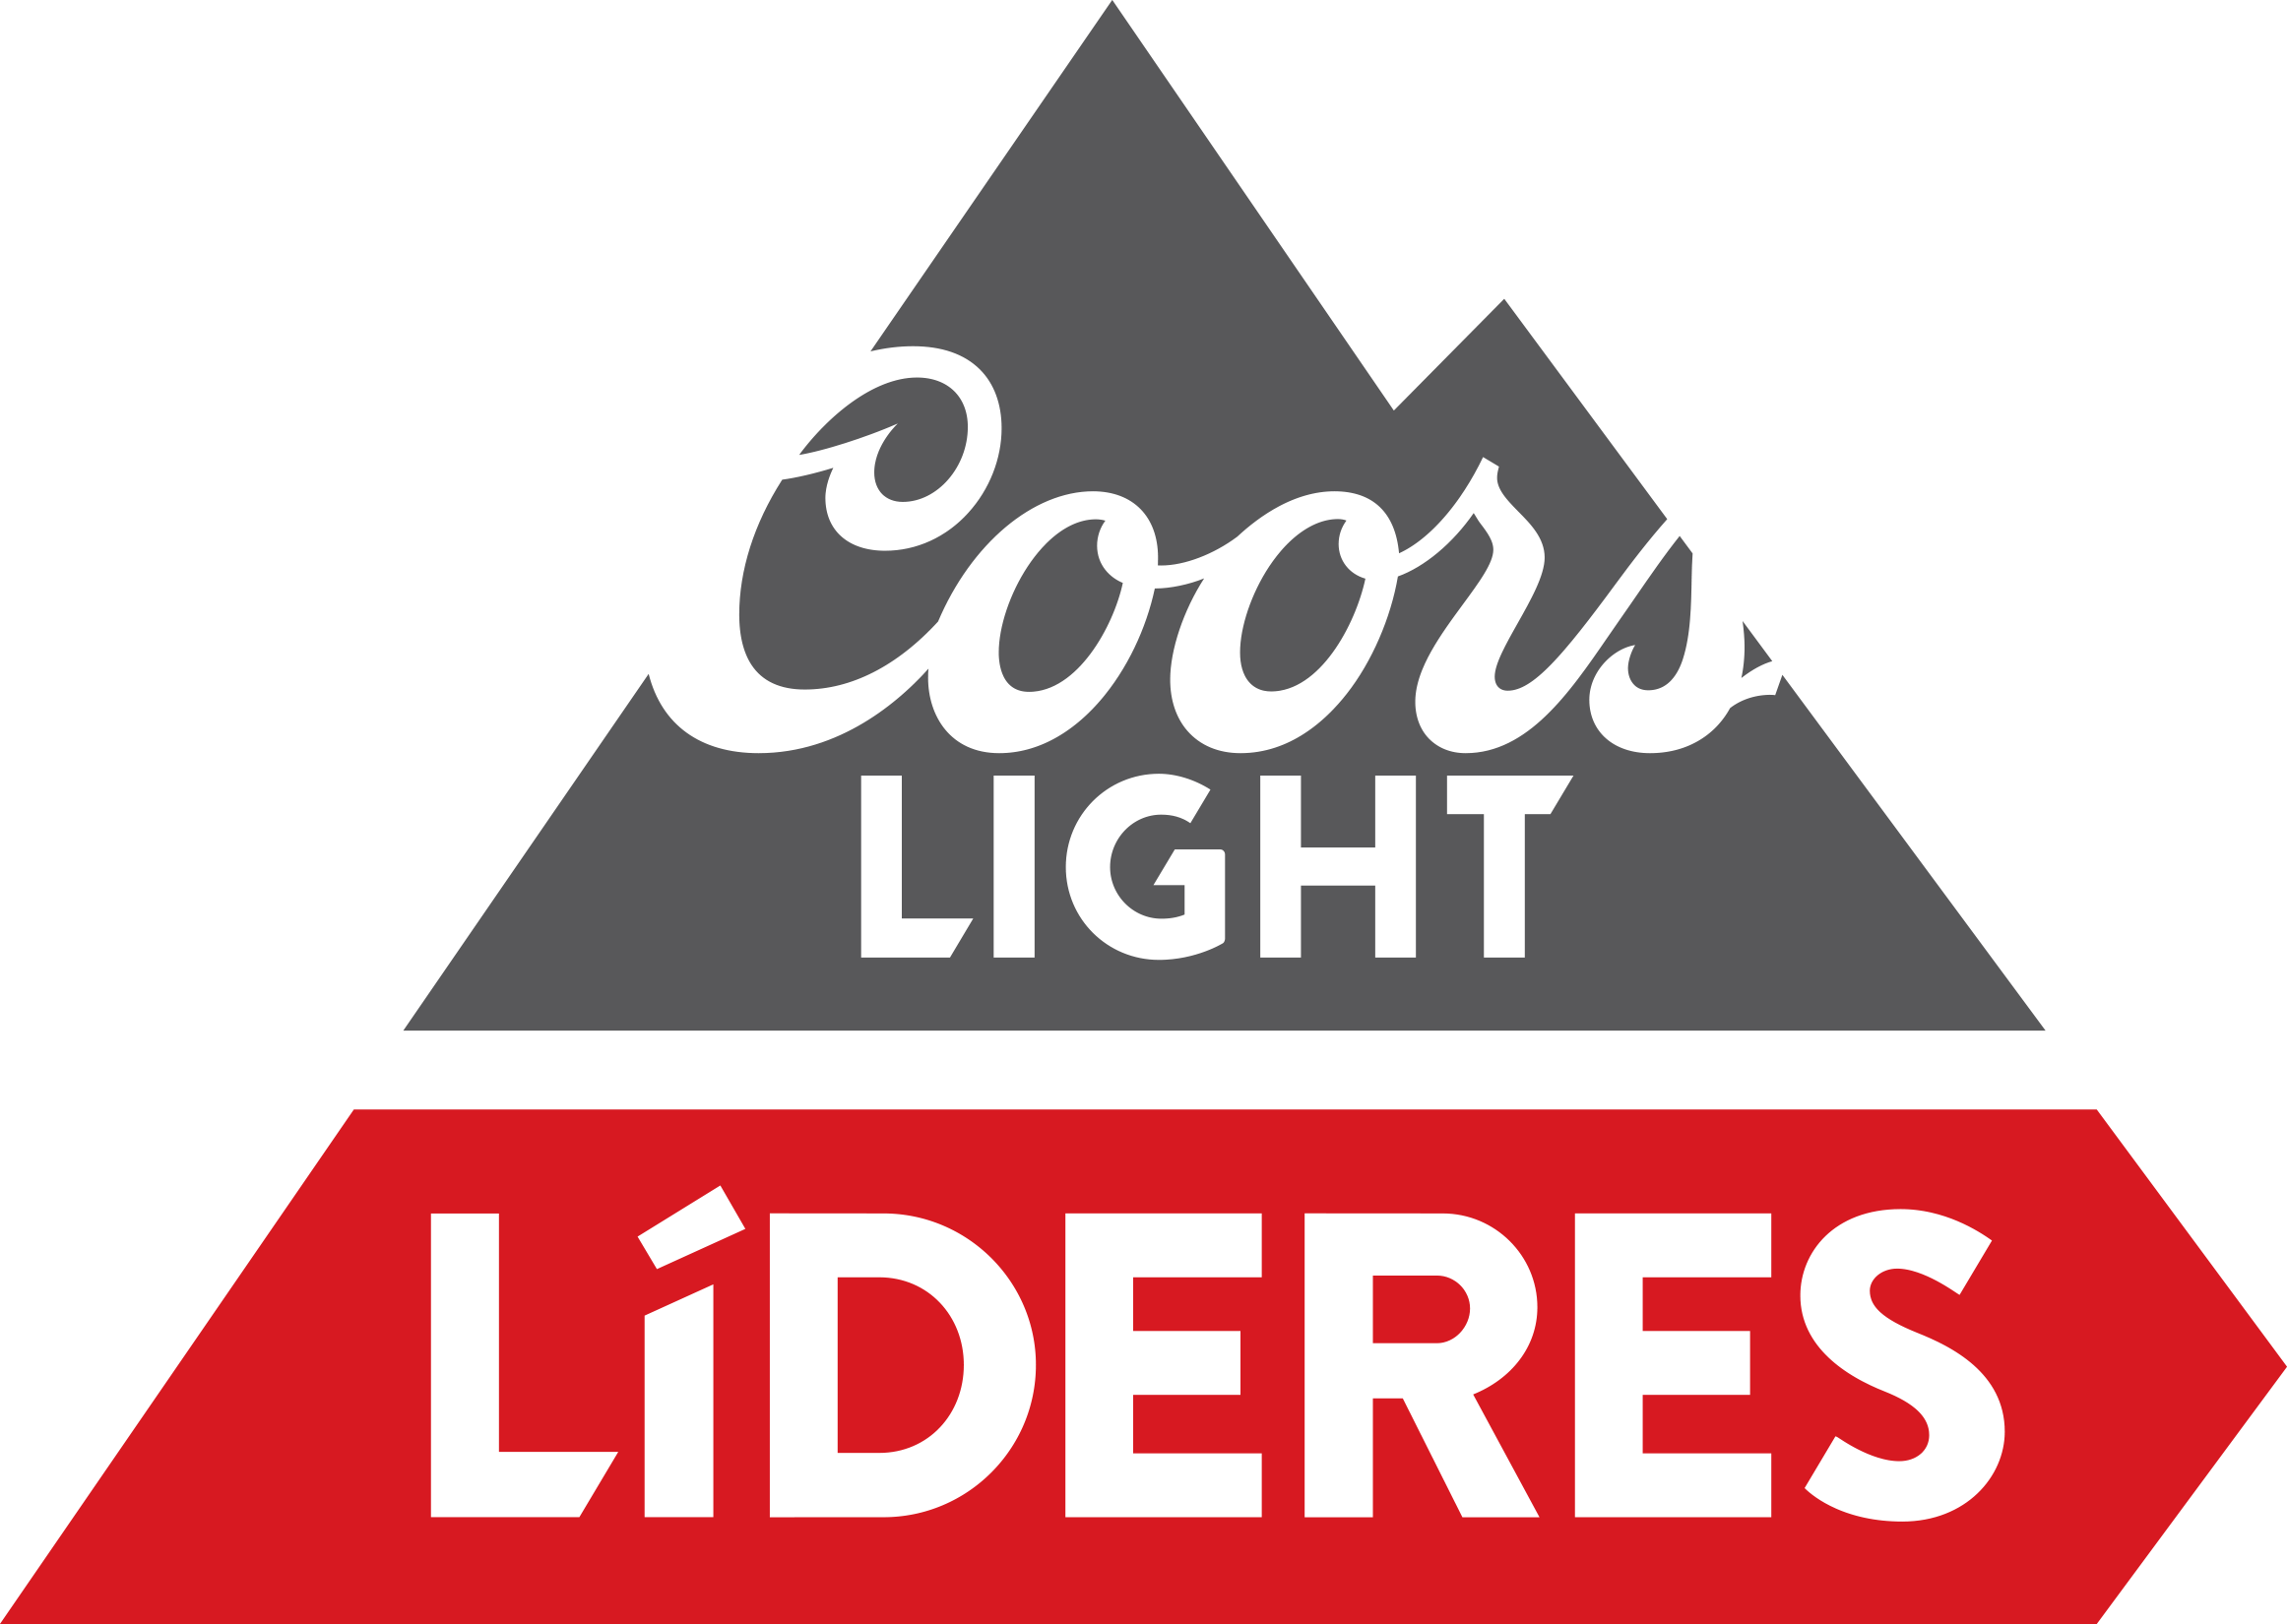 coors-light-lideres-new-logo-cmyk-transparent-bg.png